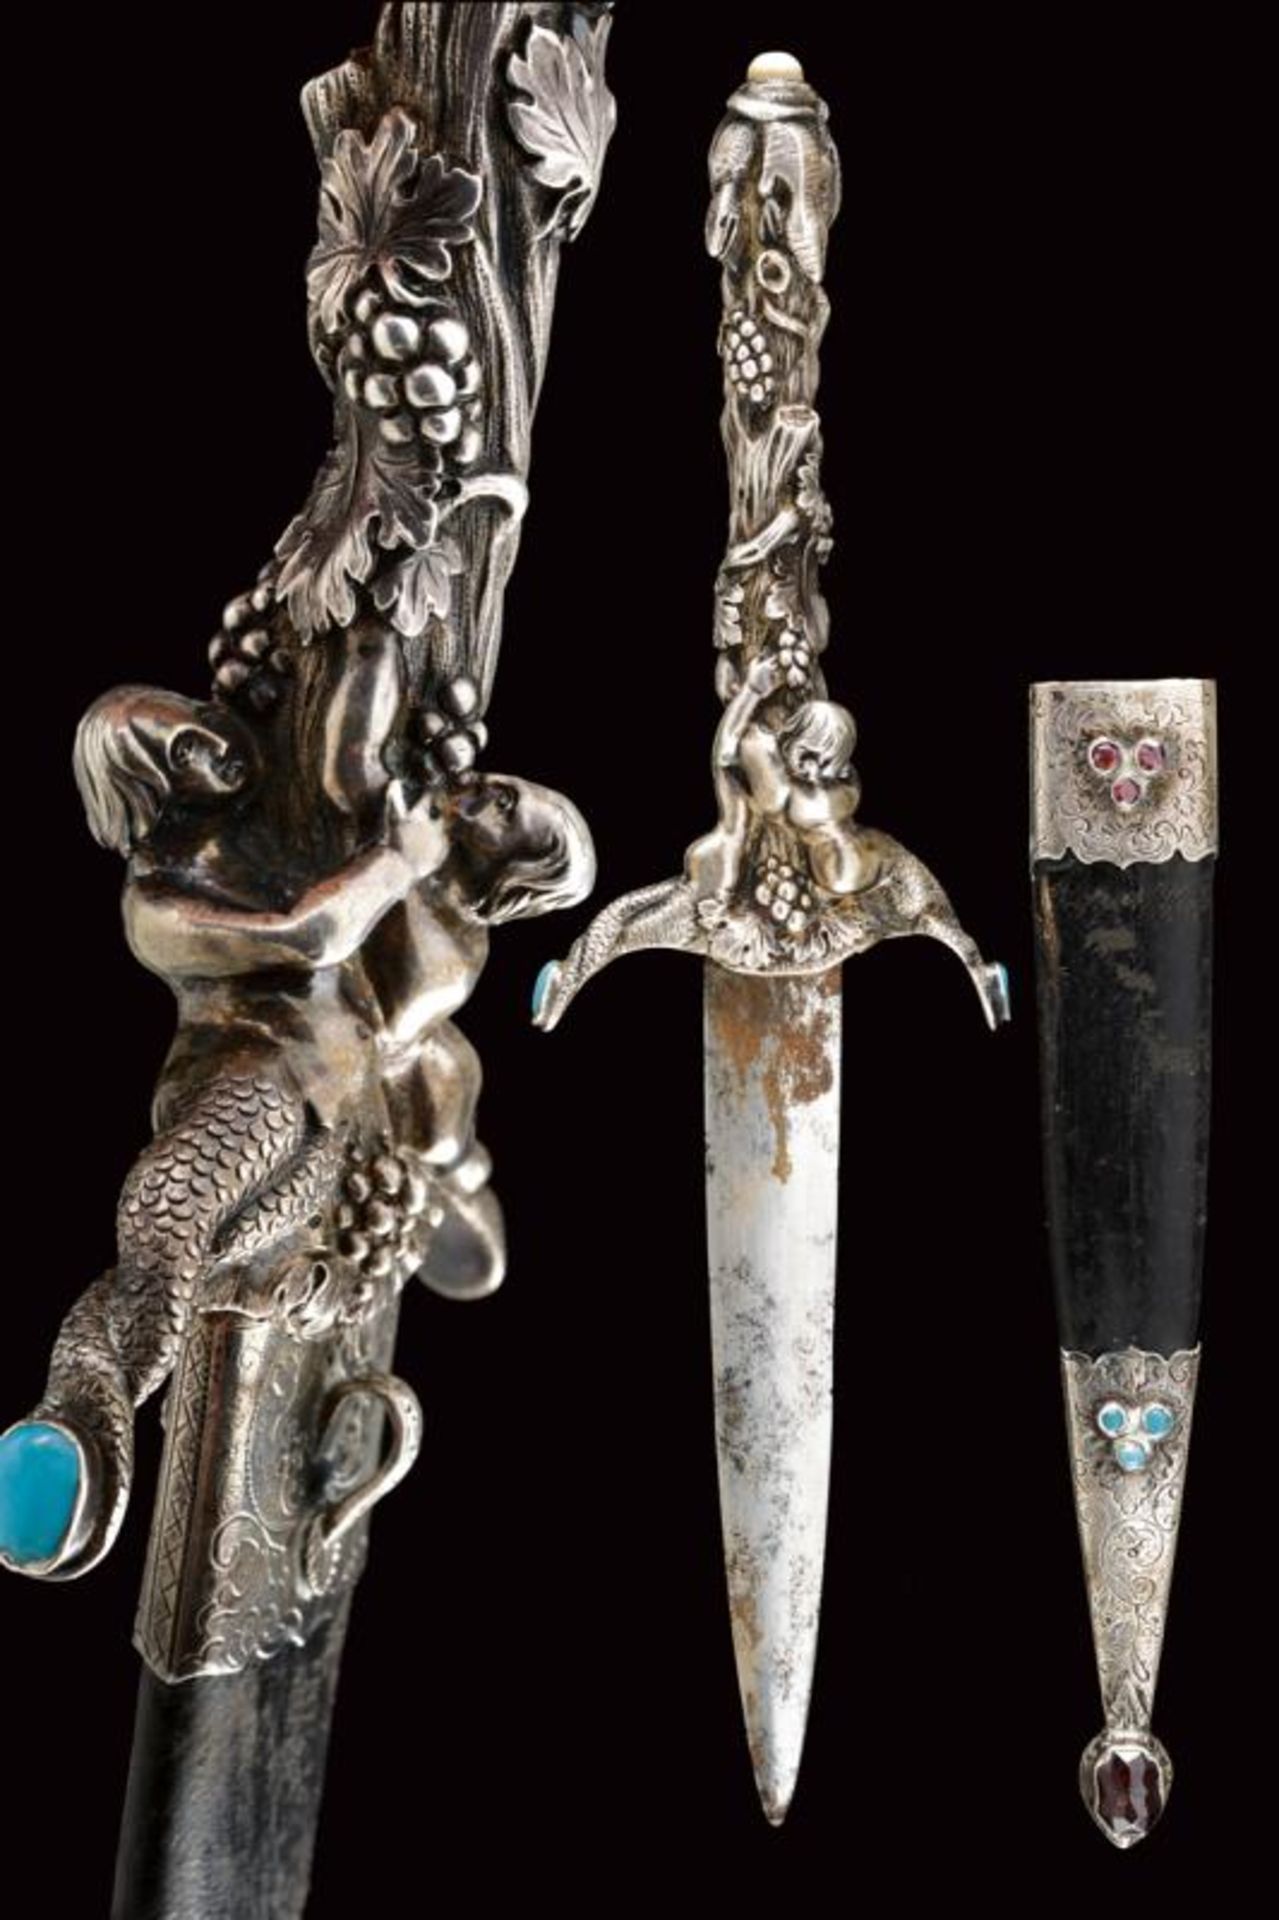 An elegant silver mounted romantic dagger